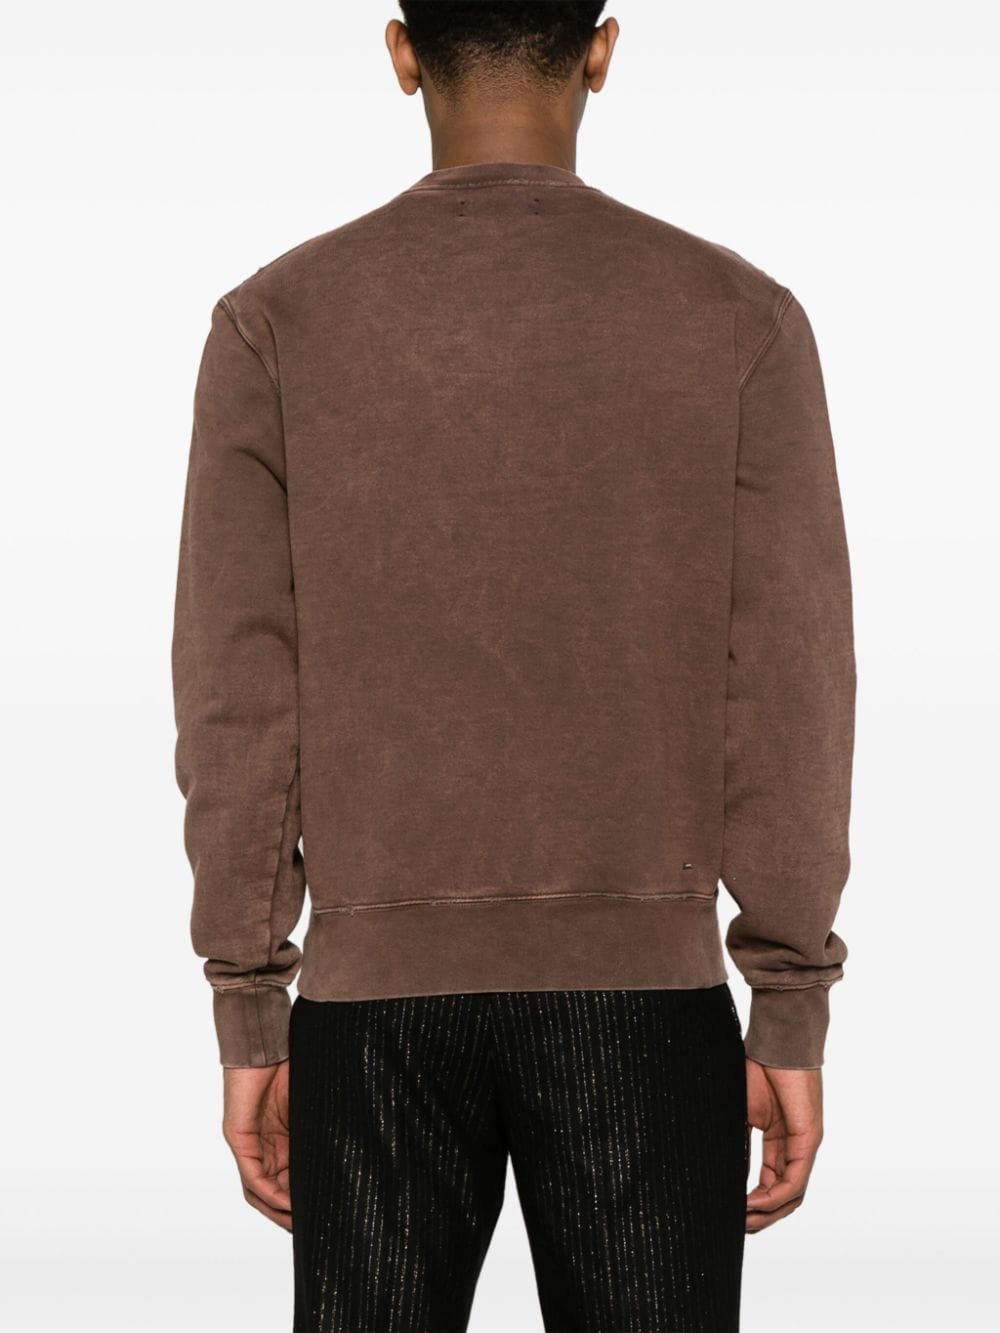 Eagle-print cotton sweatshirt - Sweatshirt